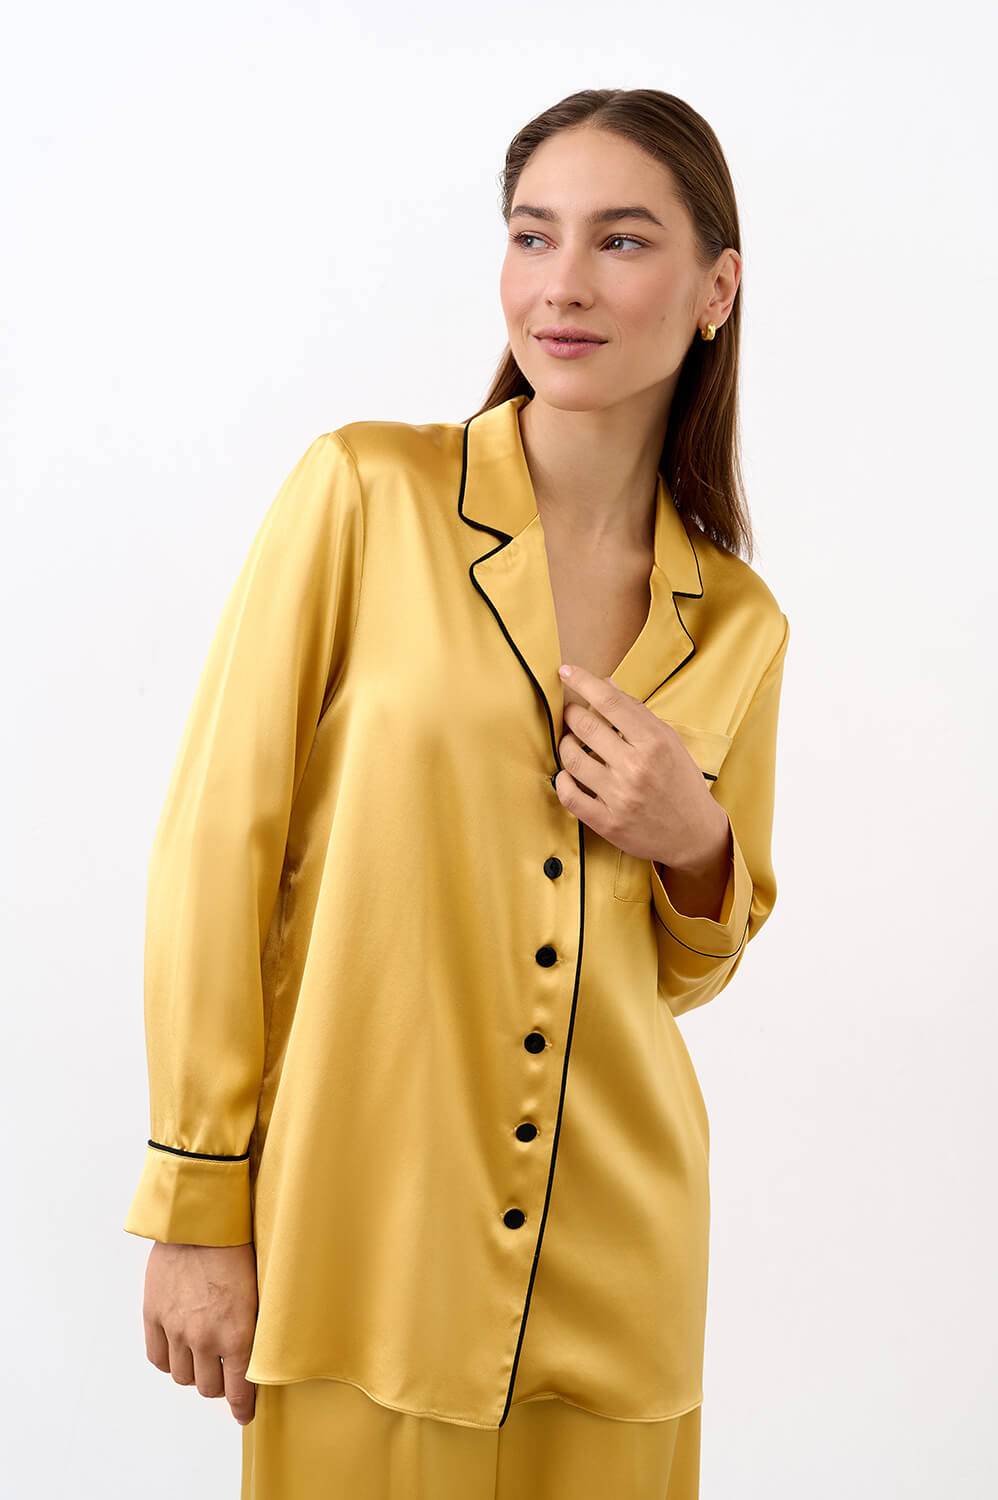 Пижама Gold silk из натурального шелка